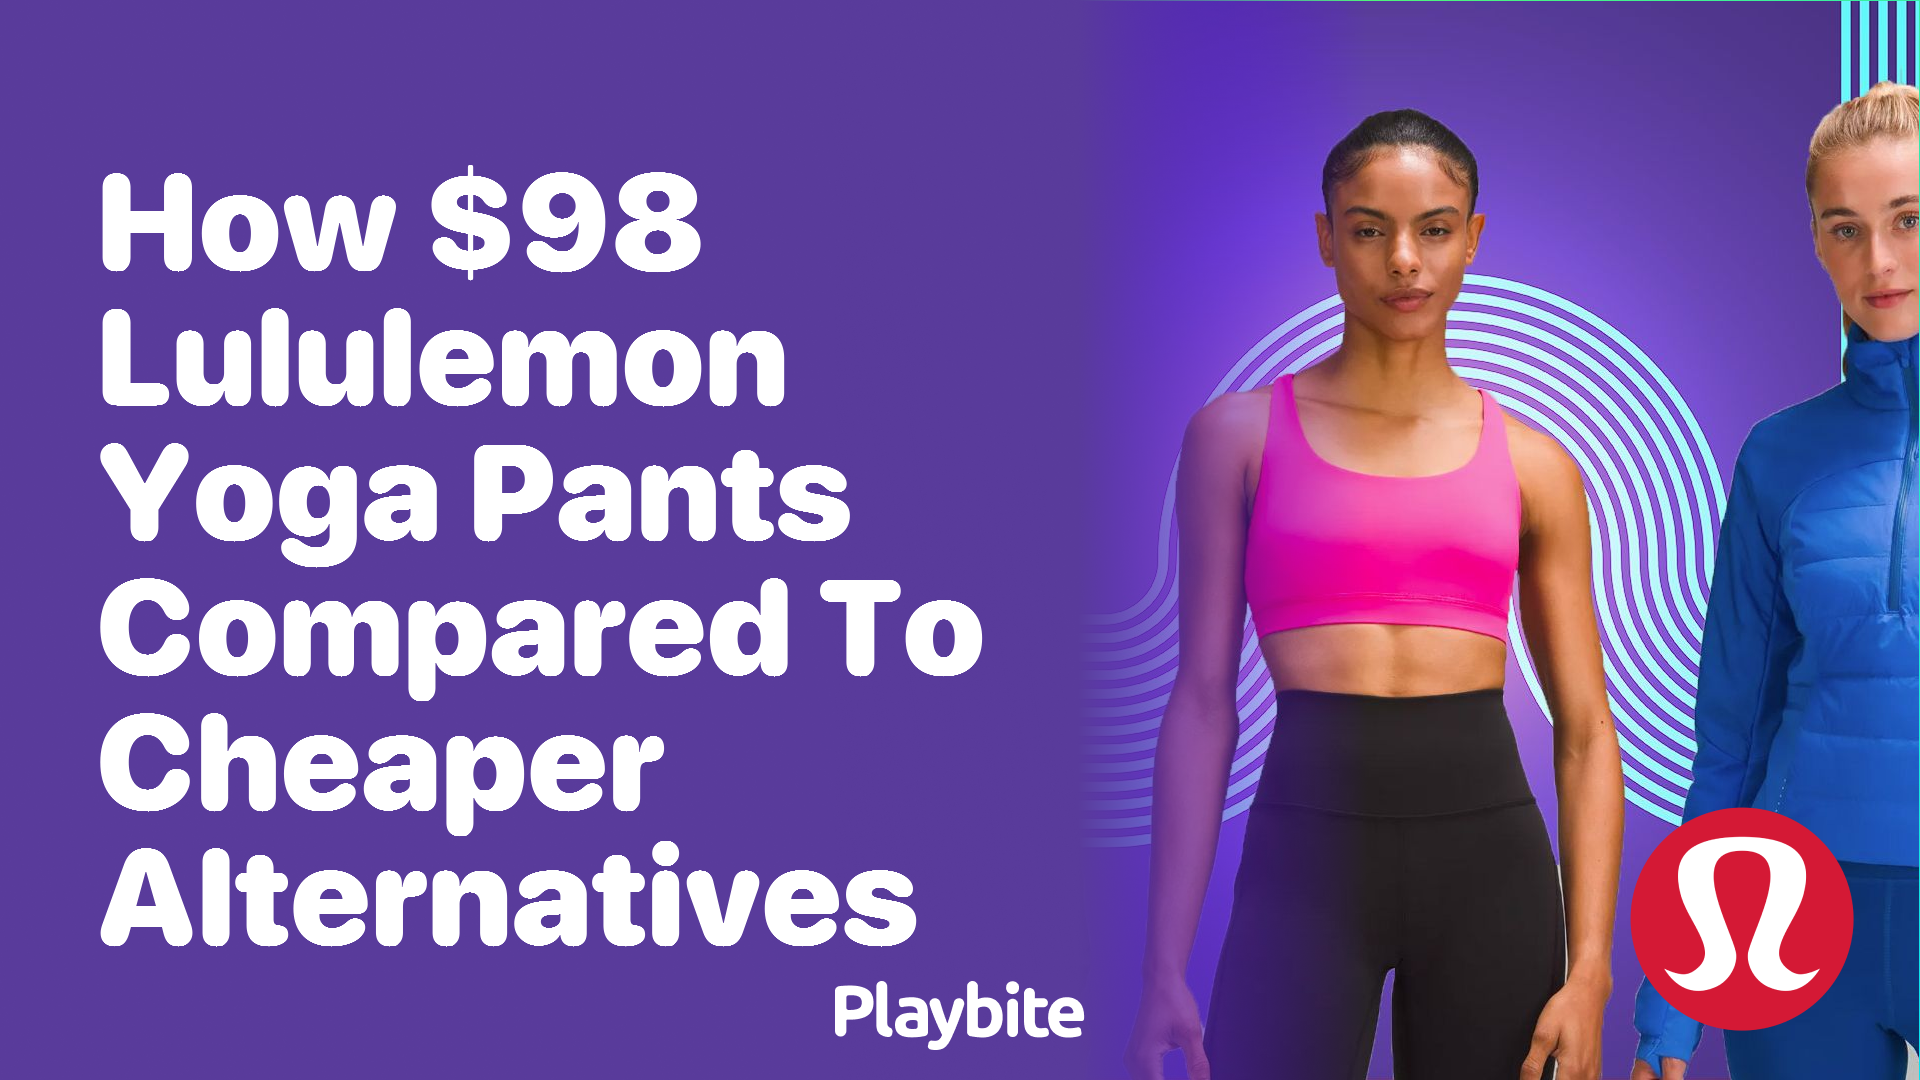 How Do $98 Lululemon Yoga Pants Compare to Cheaper Alternatives? - Playbite